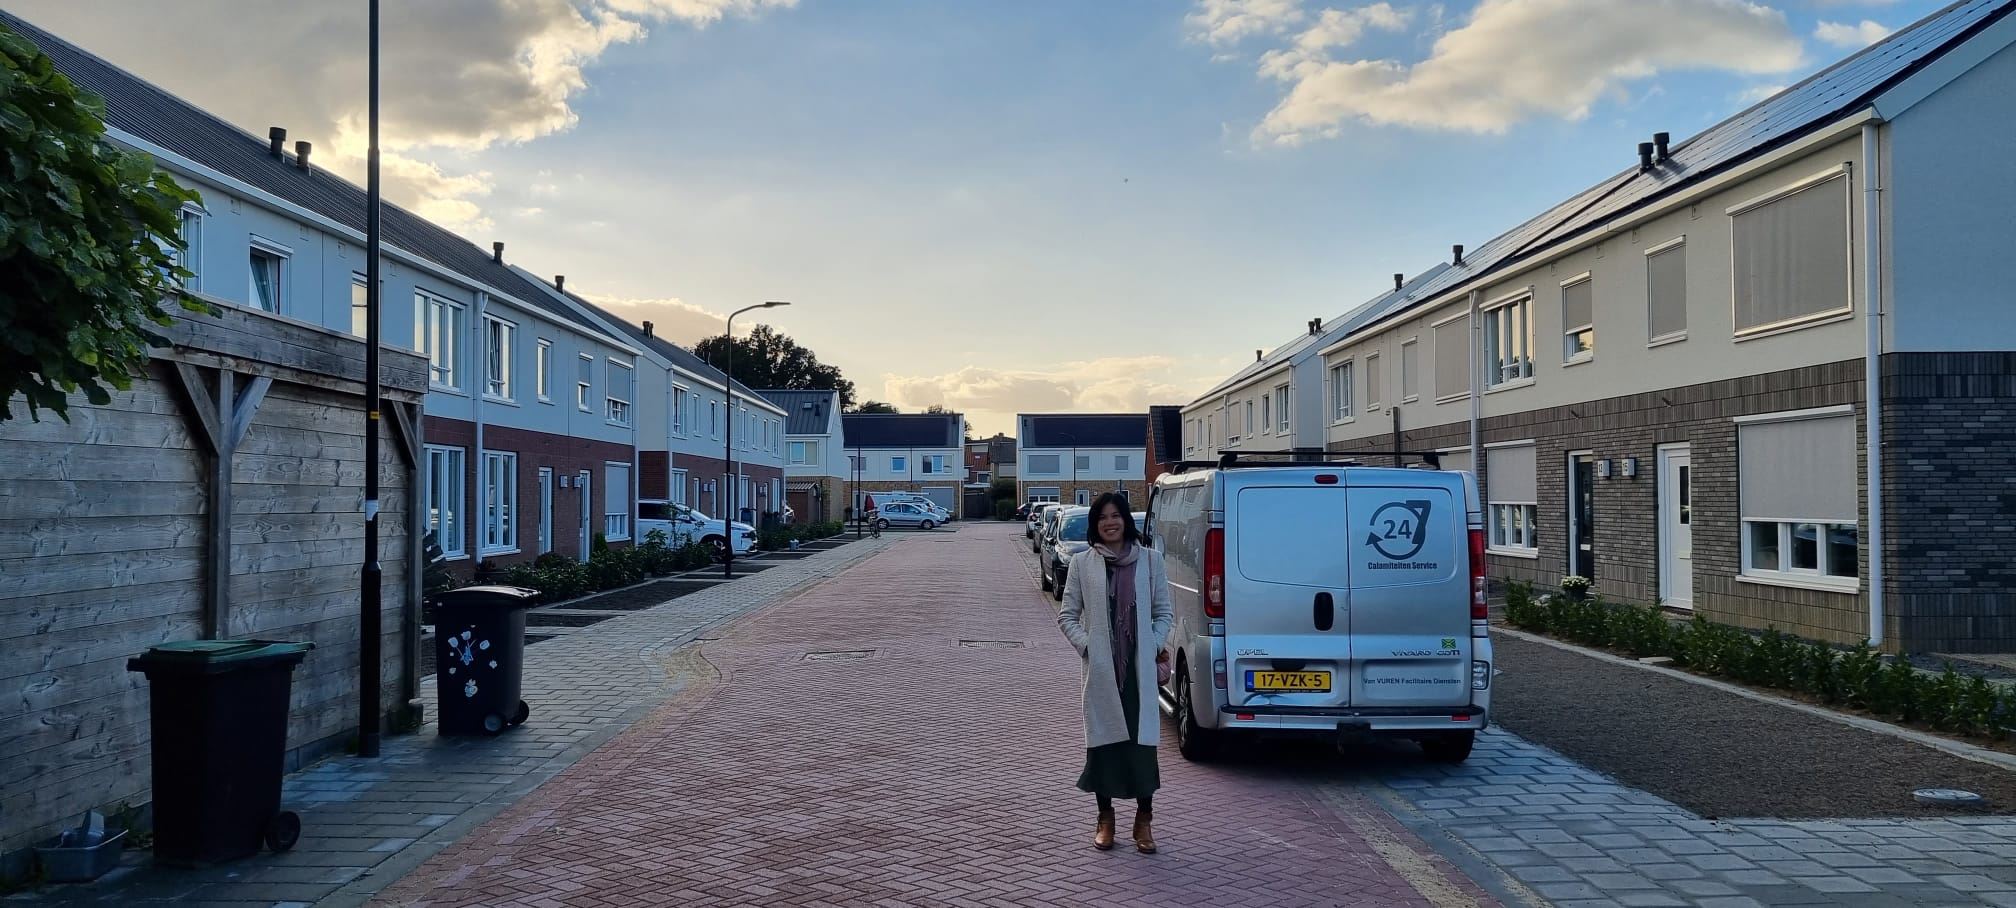 A Retrofitted Neighbourhood In The Netherlands